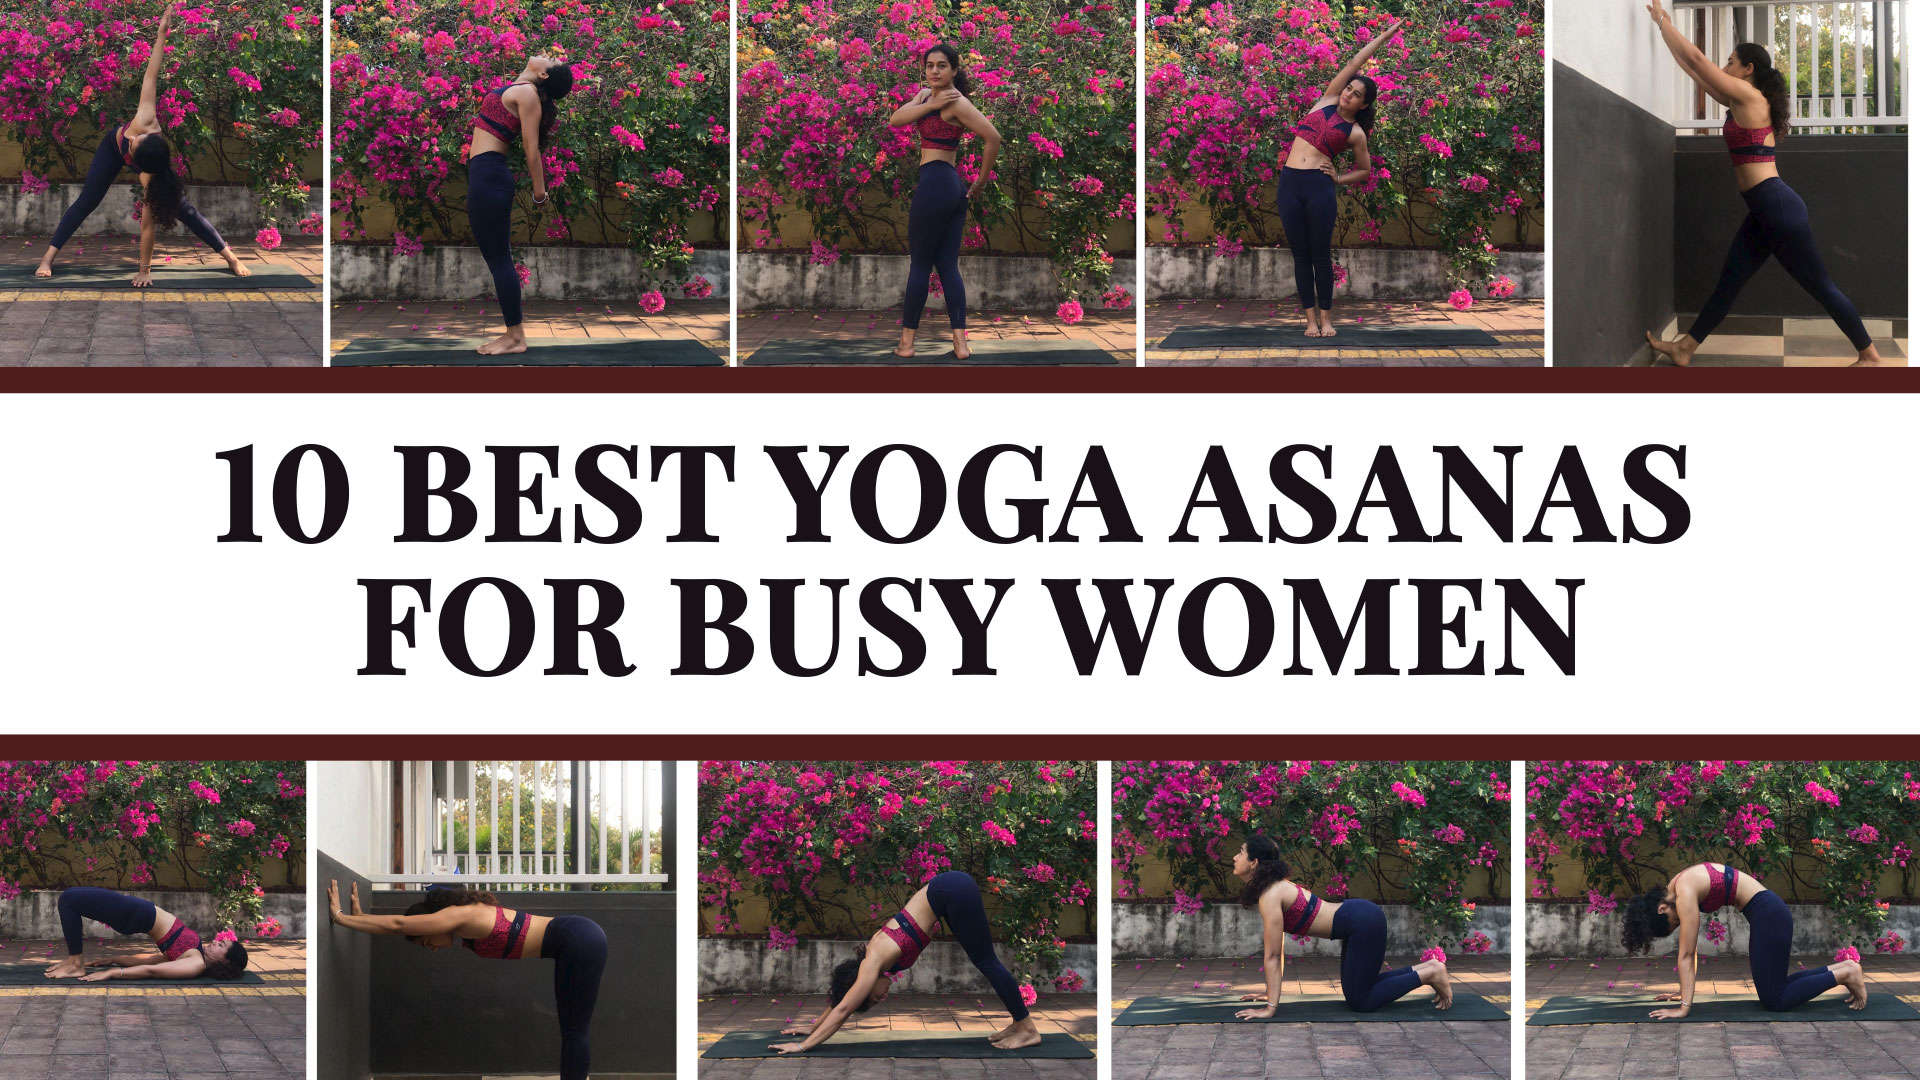 Yoga asanas every busy woman must do daily